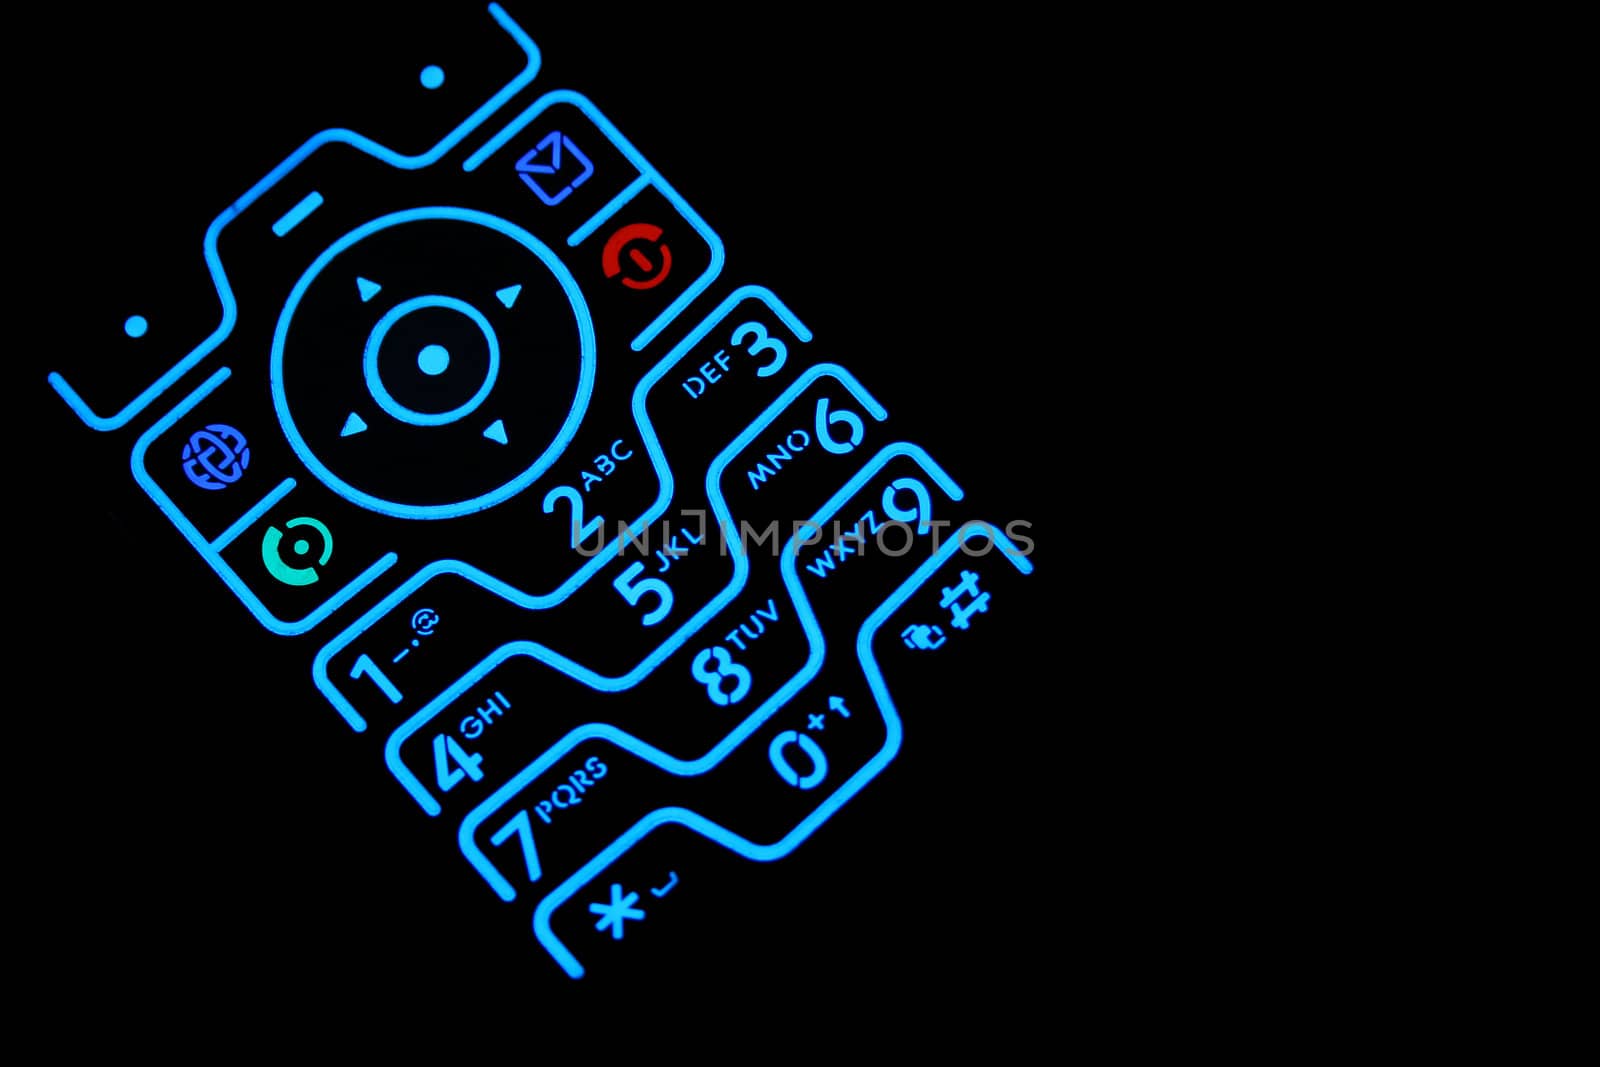 A Lighted Cell phone keypad on black